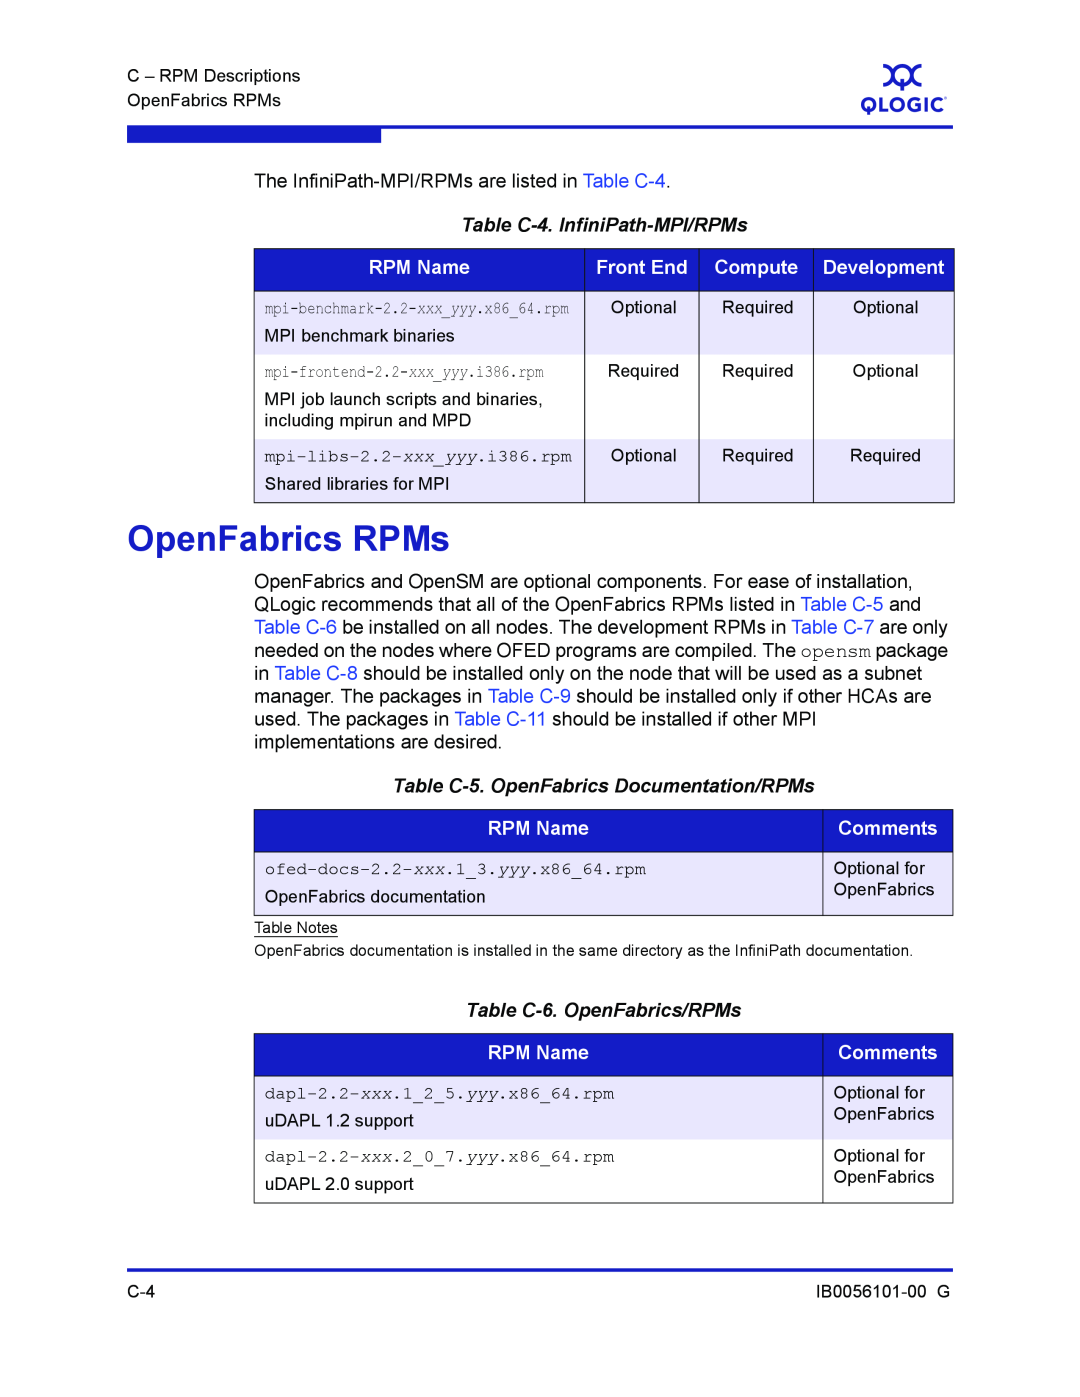 Q-Logic IB0056101-00 G manual OpenFabrics RPMs, Table C-4. InfiniPath-MPI/RPMs, Table C-5. OpenFabrics Documentation/RPMs 